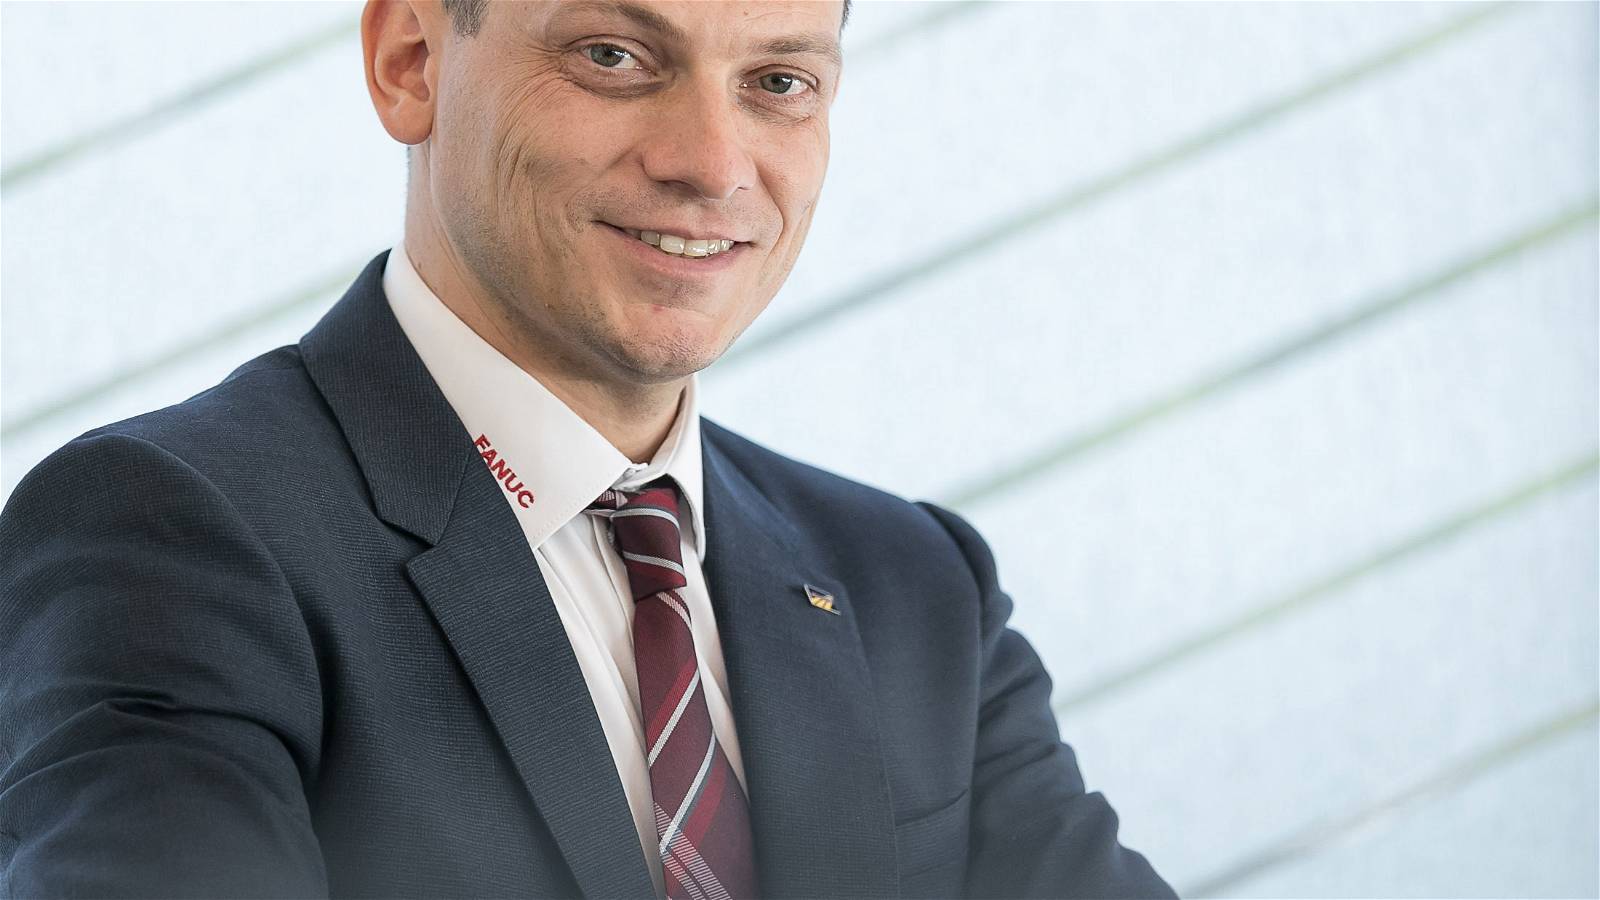 FANUC Europe’un yeni başkan ve CEO’su  Marco Ghirardello oldu